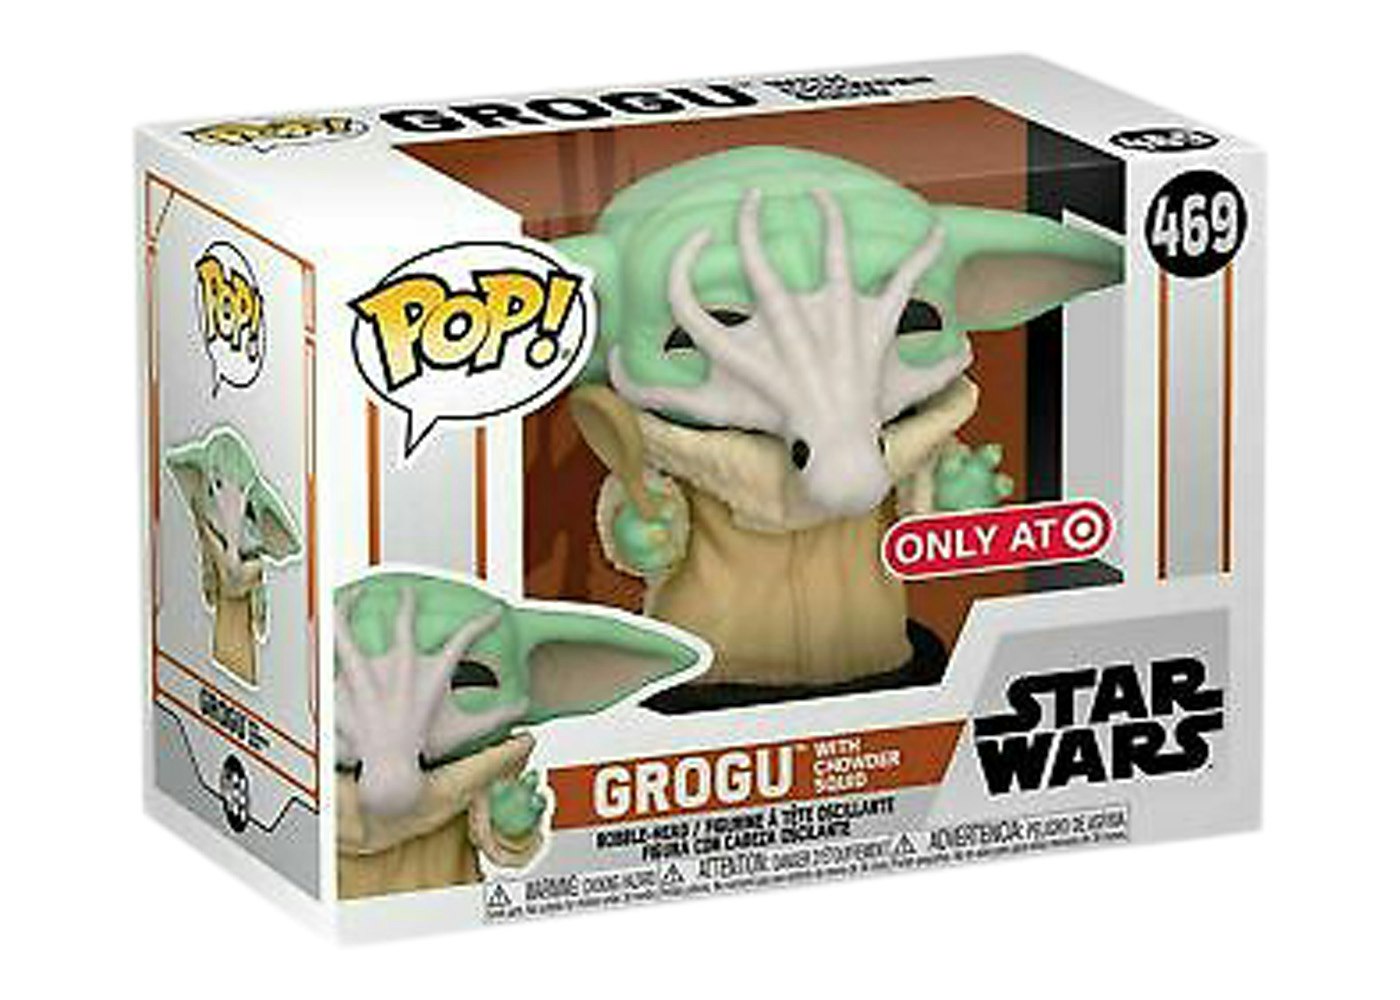 Funko Pop! Star Wars The Mandalorian Grogu with Soup Creature Target  Exclusive Figure #469 US